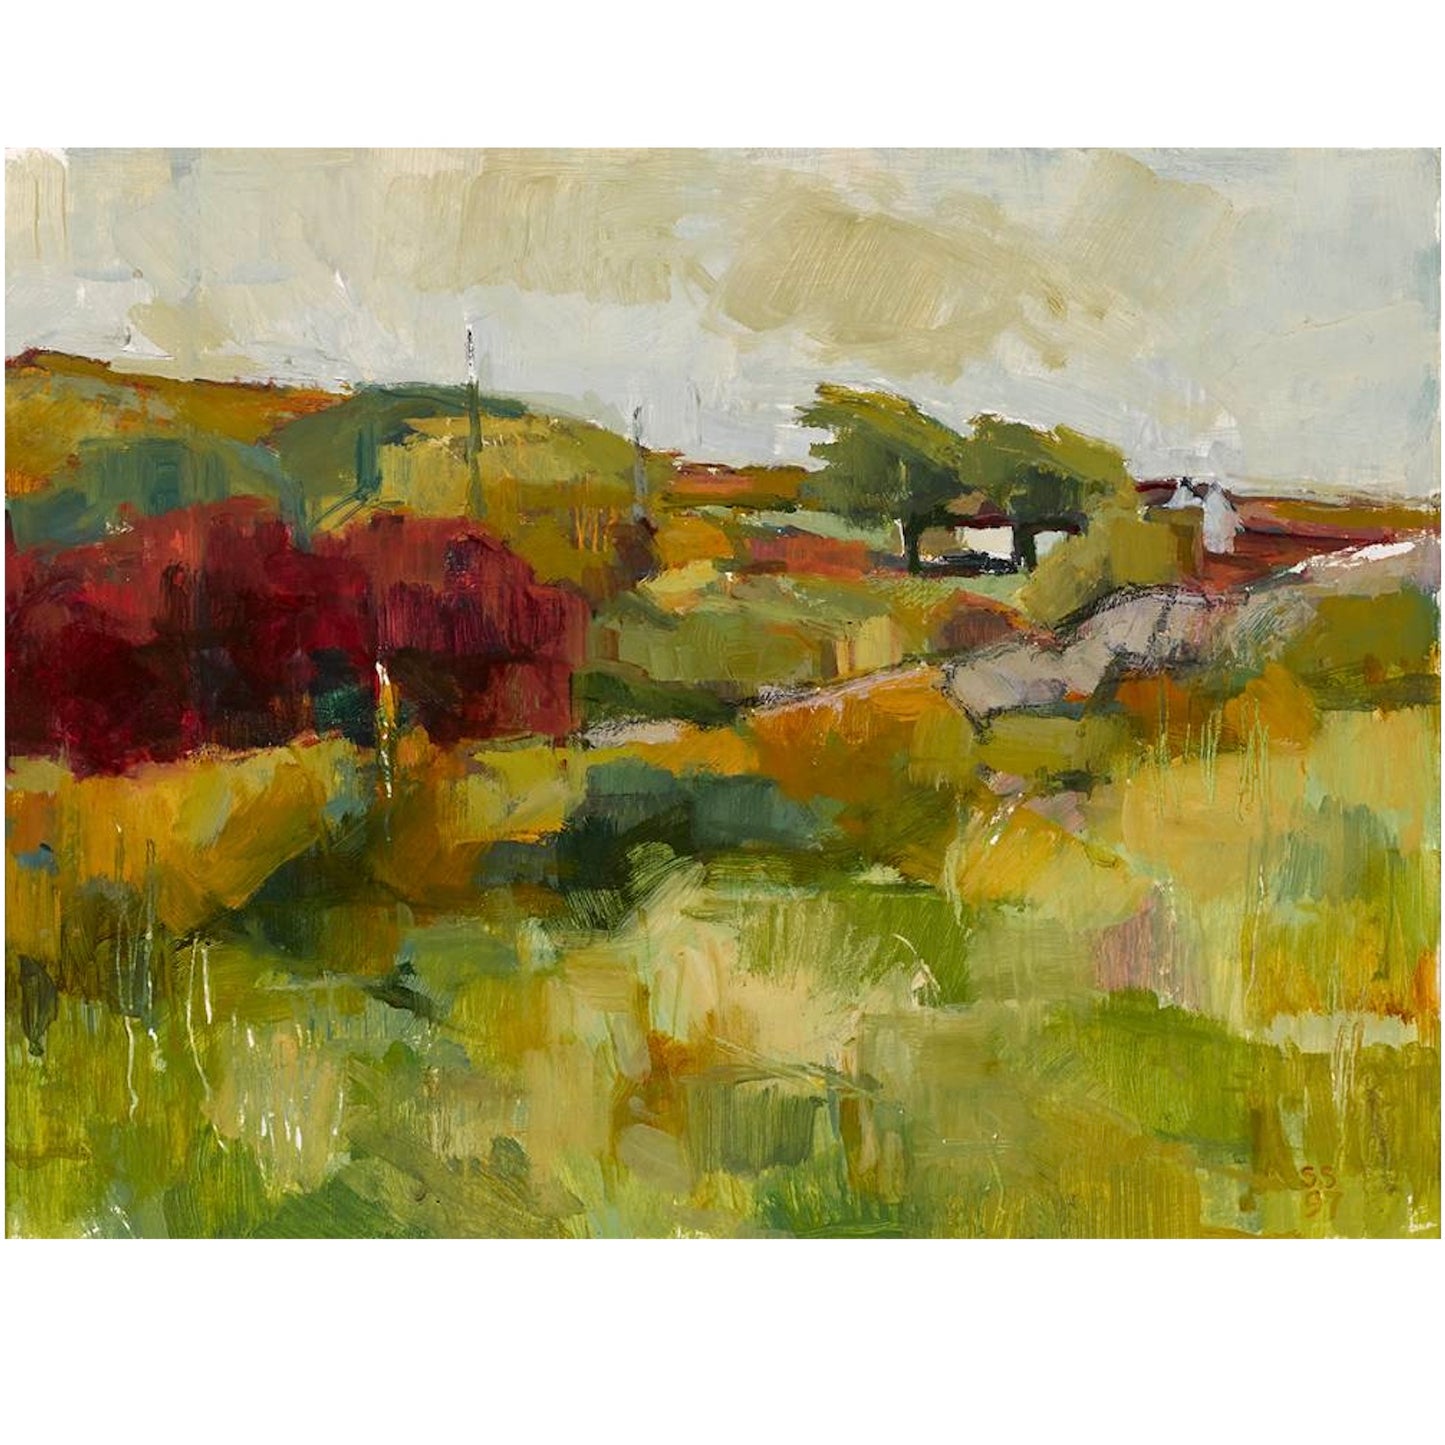 Sarah Spackman, Landscape near Cleggan